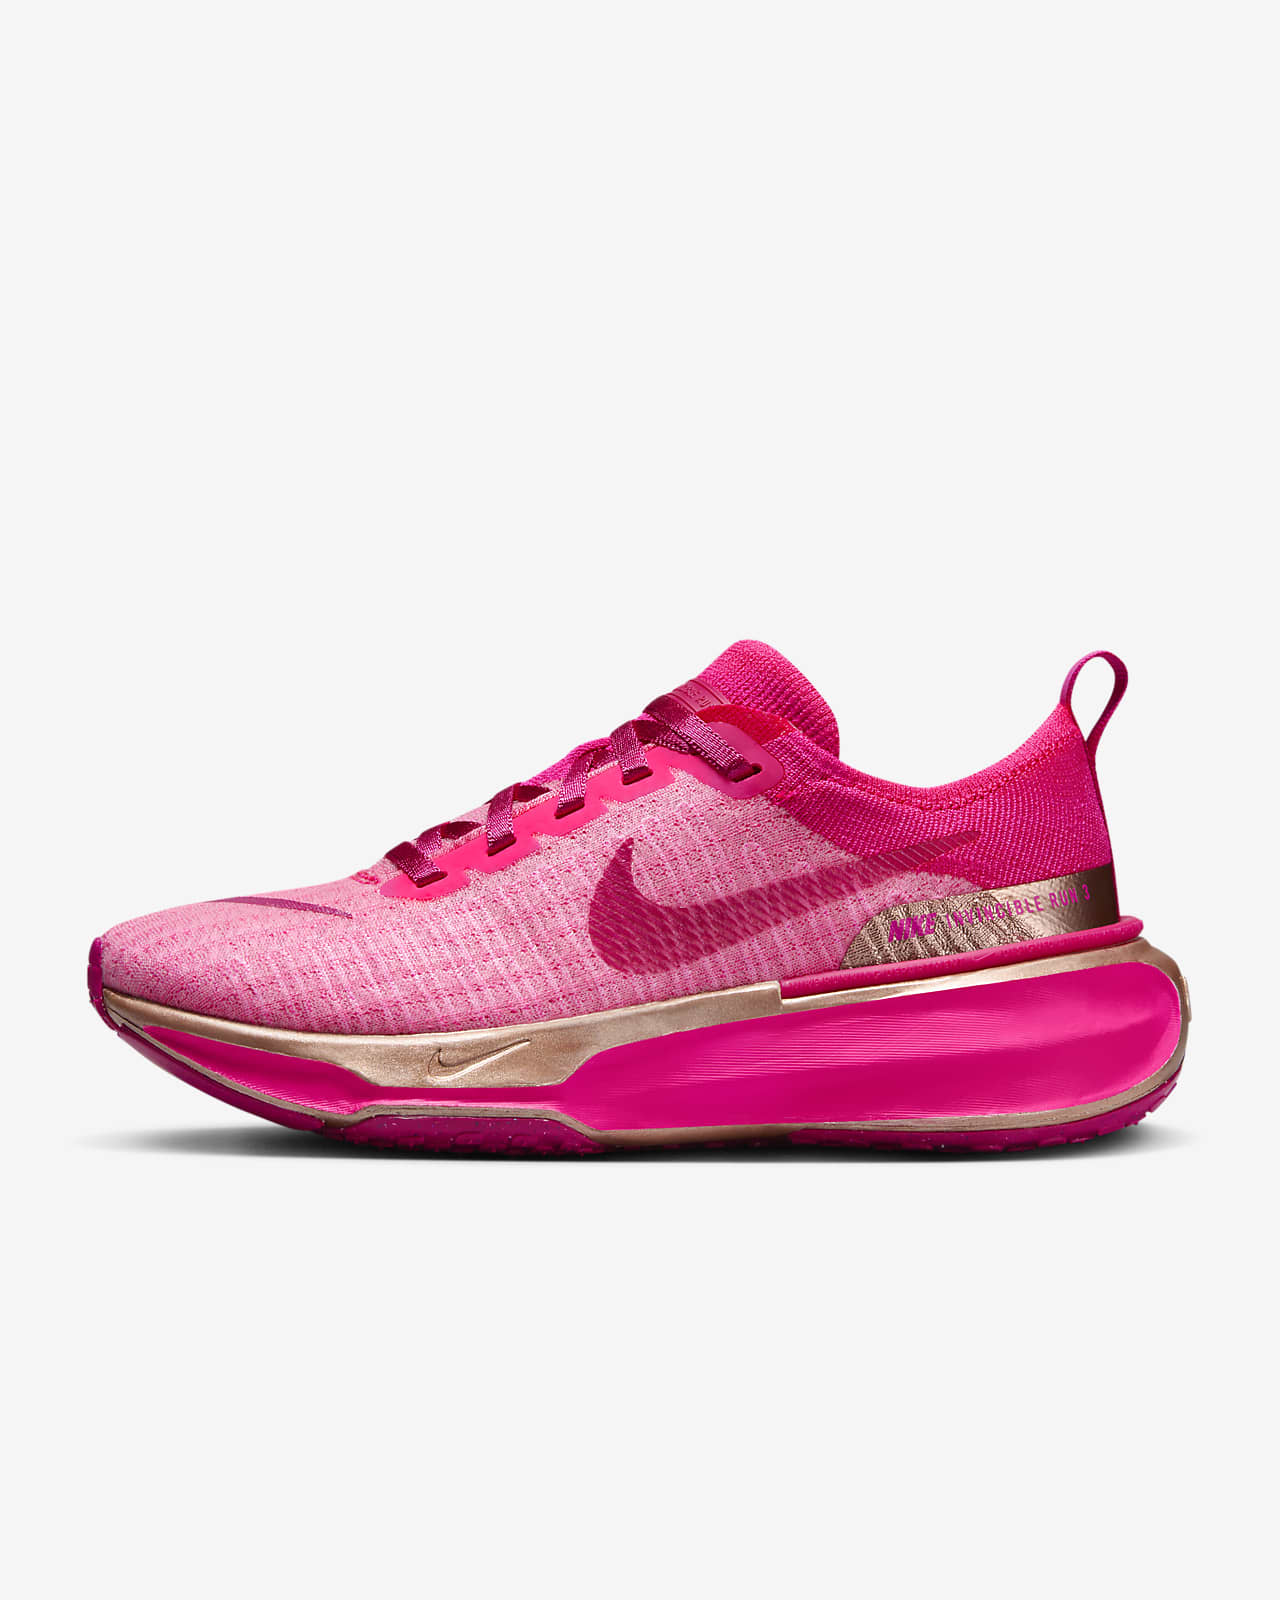 Nike Invincible 3 Road-Running Shoes - Men's